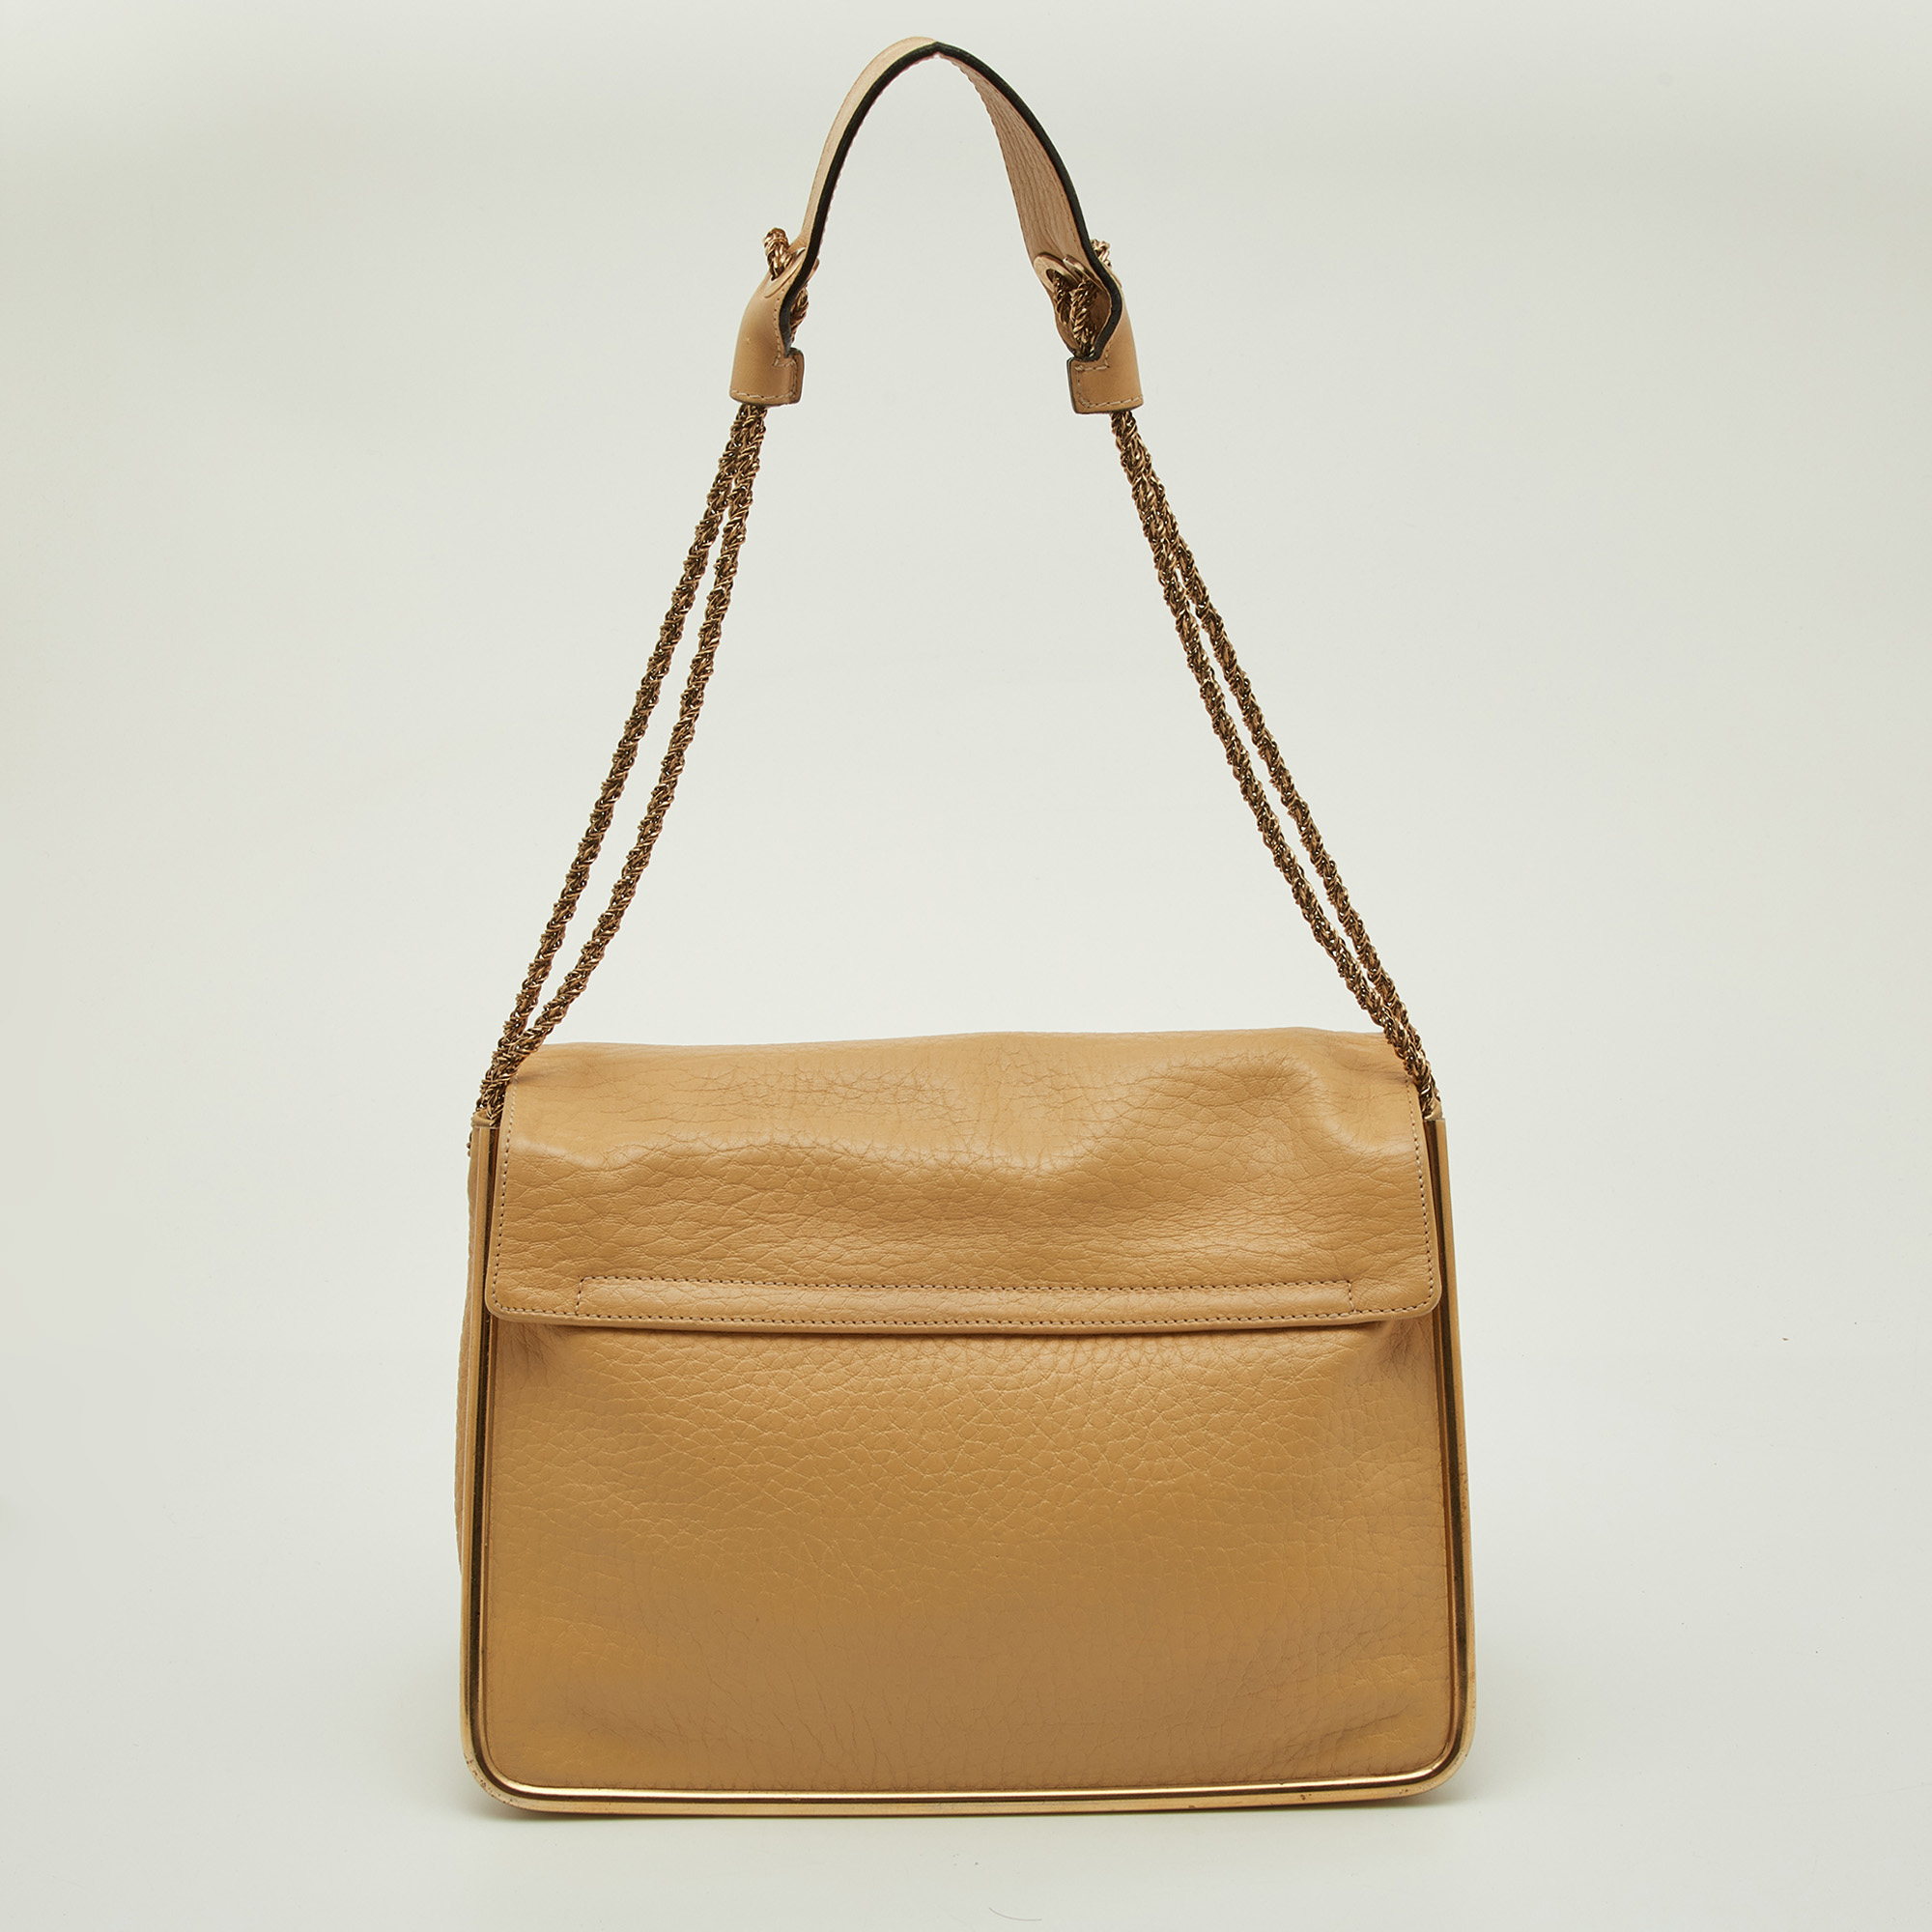 Chloe Beige Leather Medium Sally Shoulder Bag